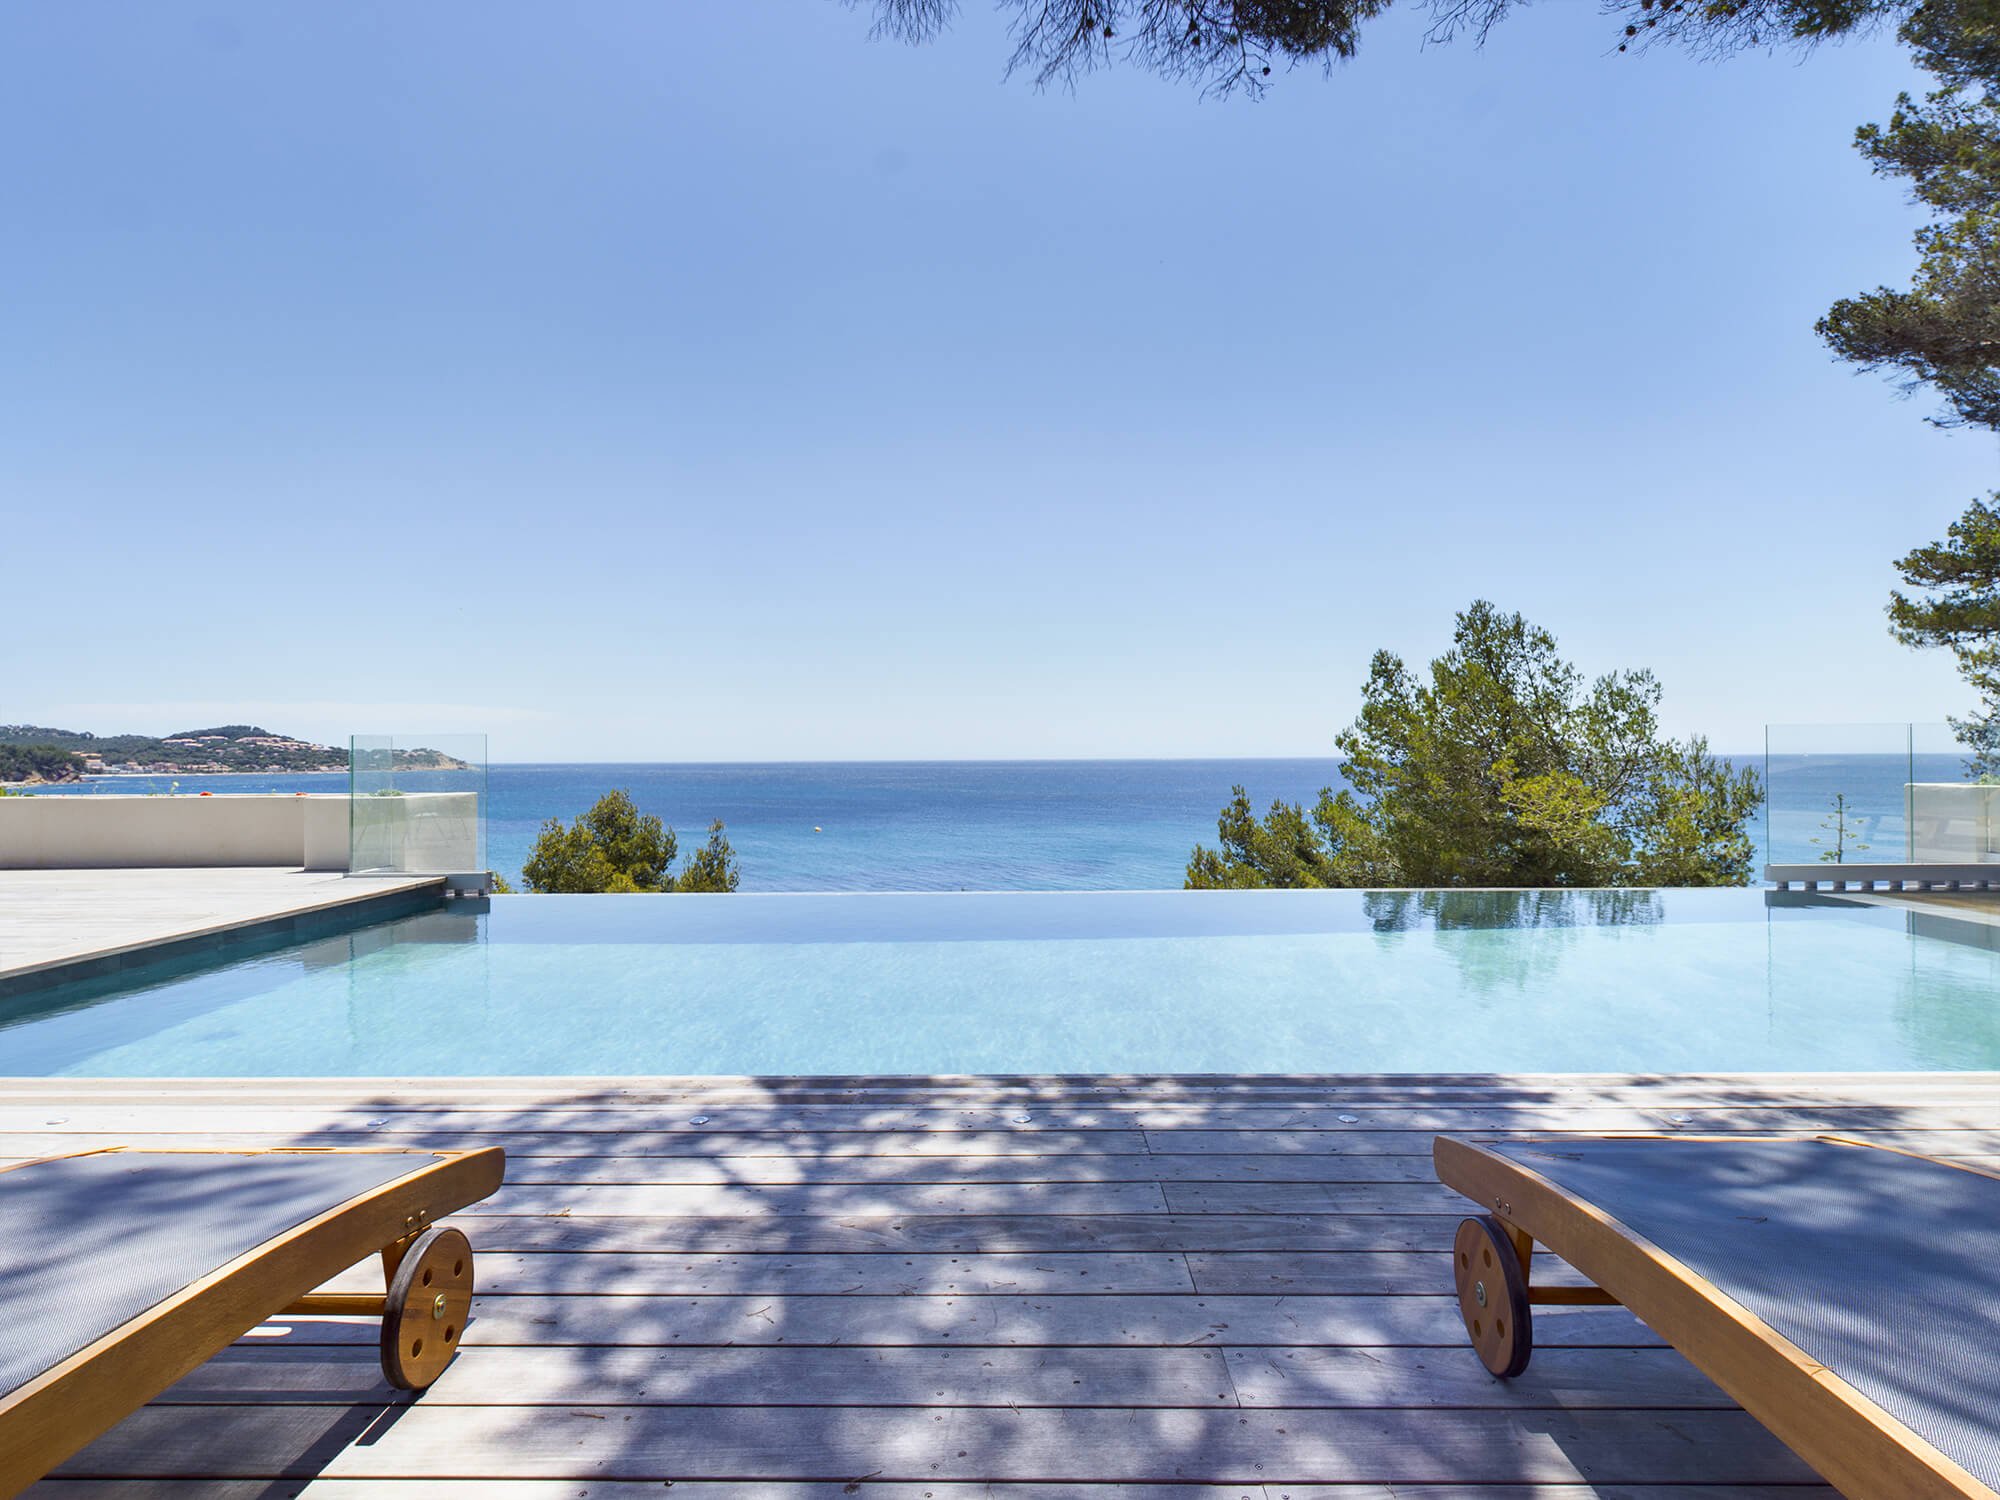 Luxury villa with swimming pool overlooking the Mediterranean Sea 